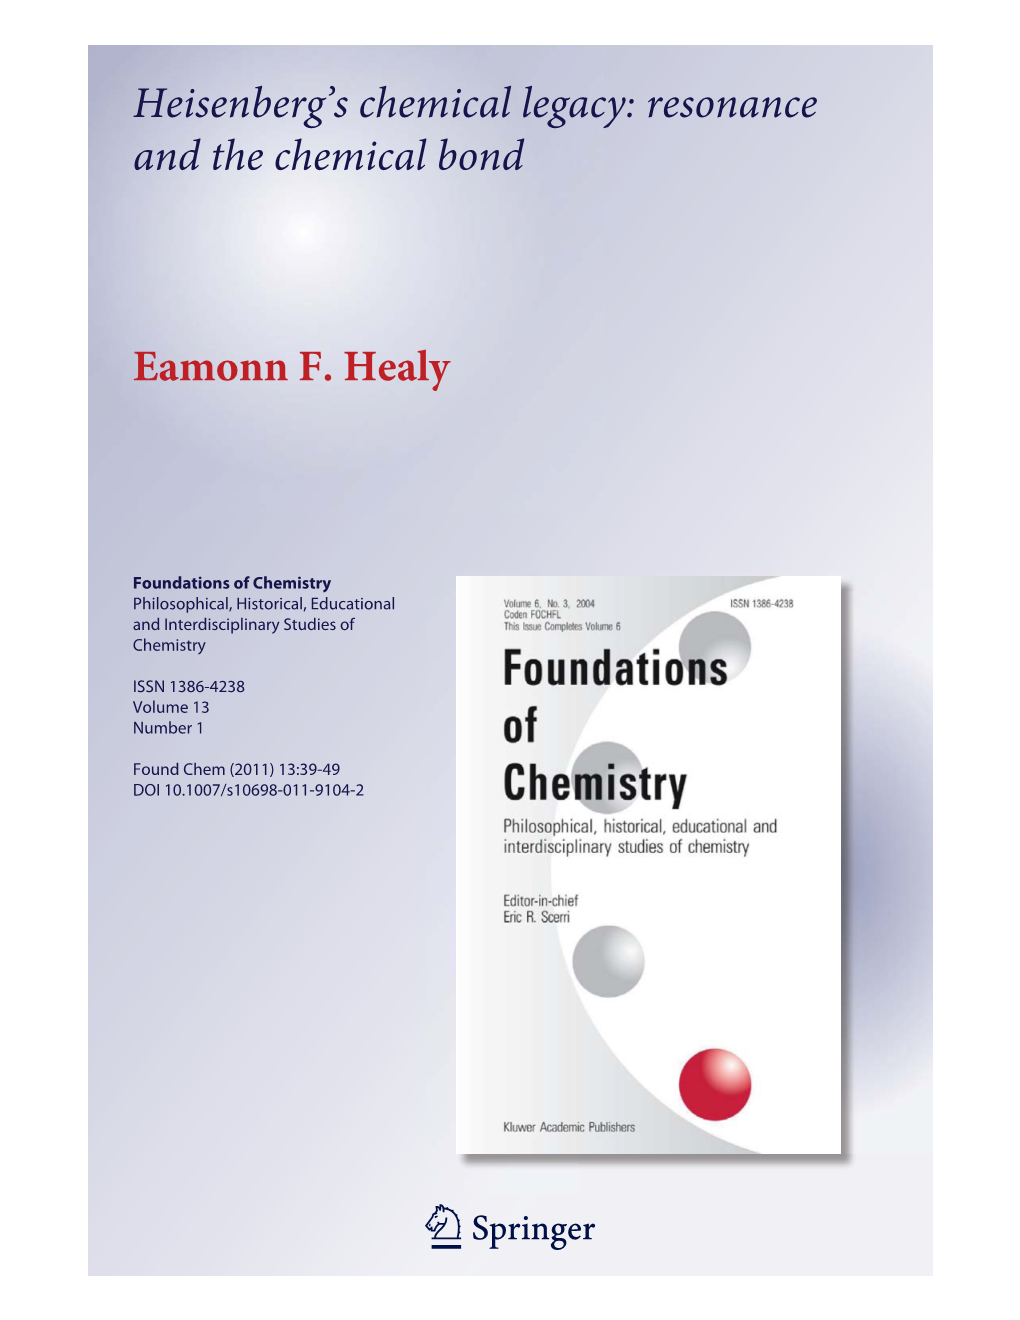 Heisenber's Chemical Legacy: Resonance